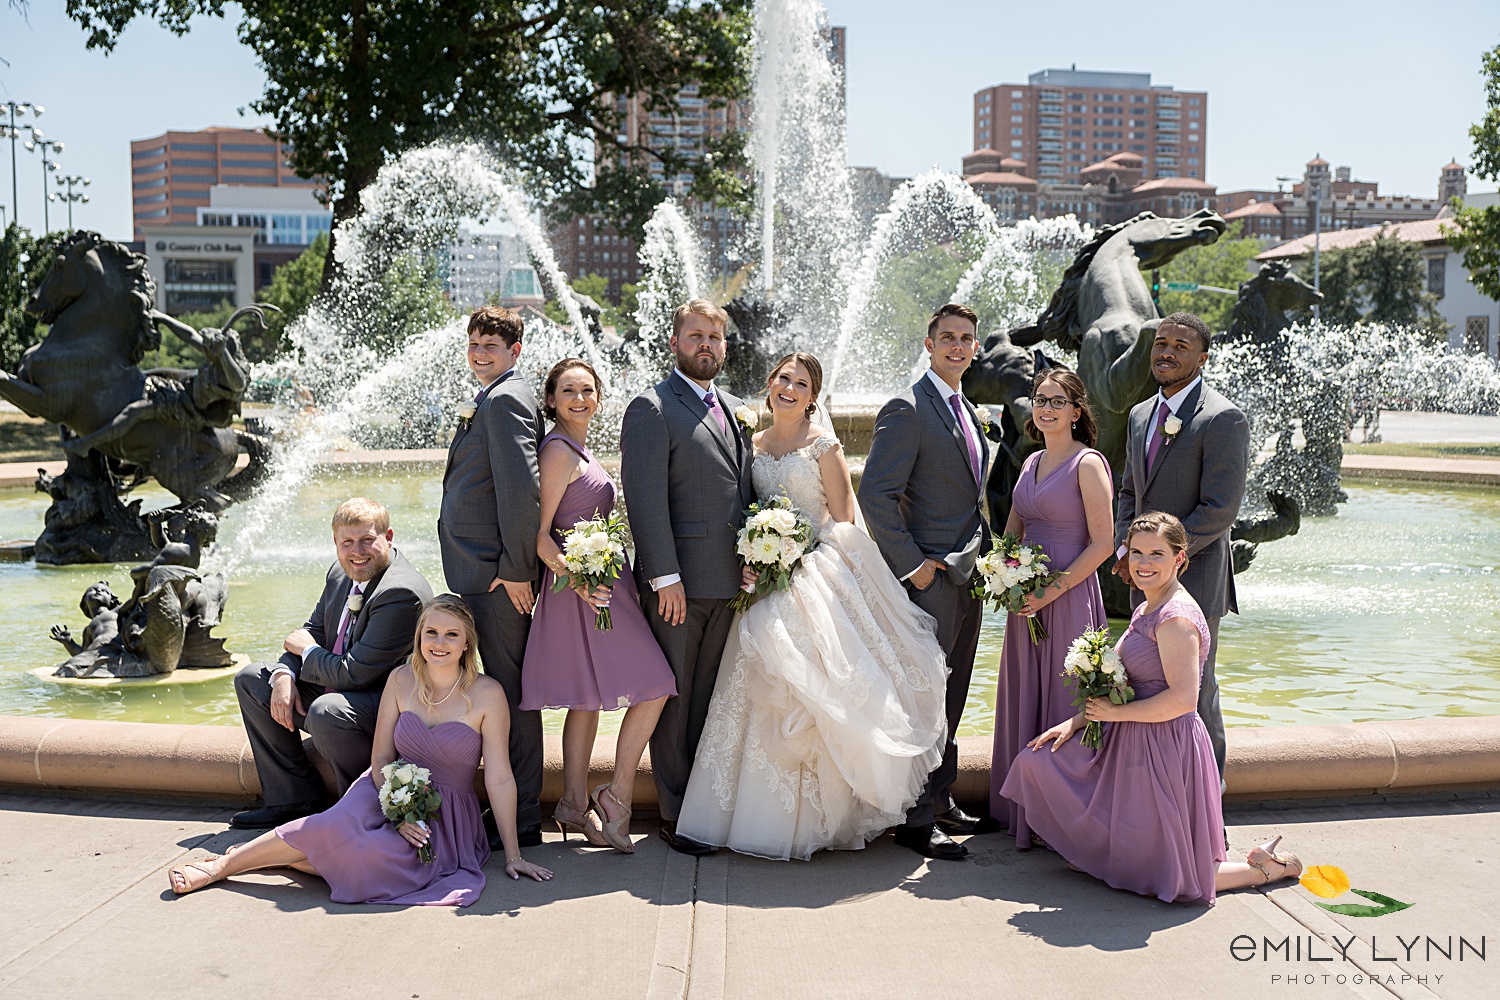 Wedding-Party-Photos-Plaza-Wedding-Photos-at-the-Fountain-Emily-Lynn-Photography_0072